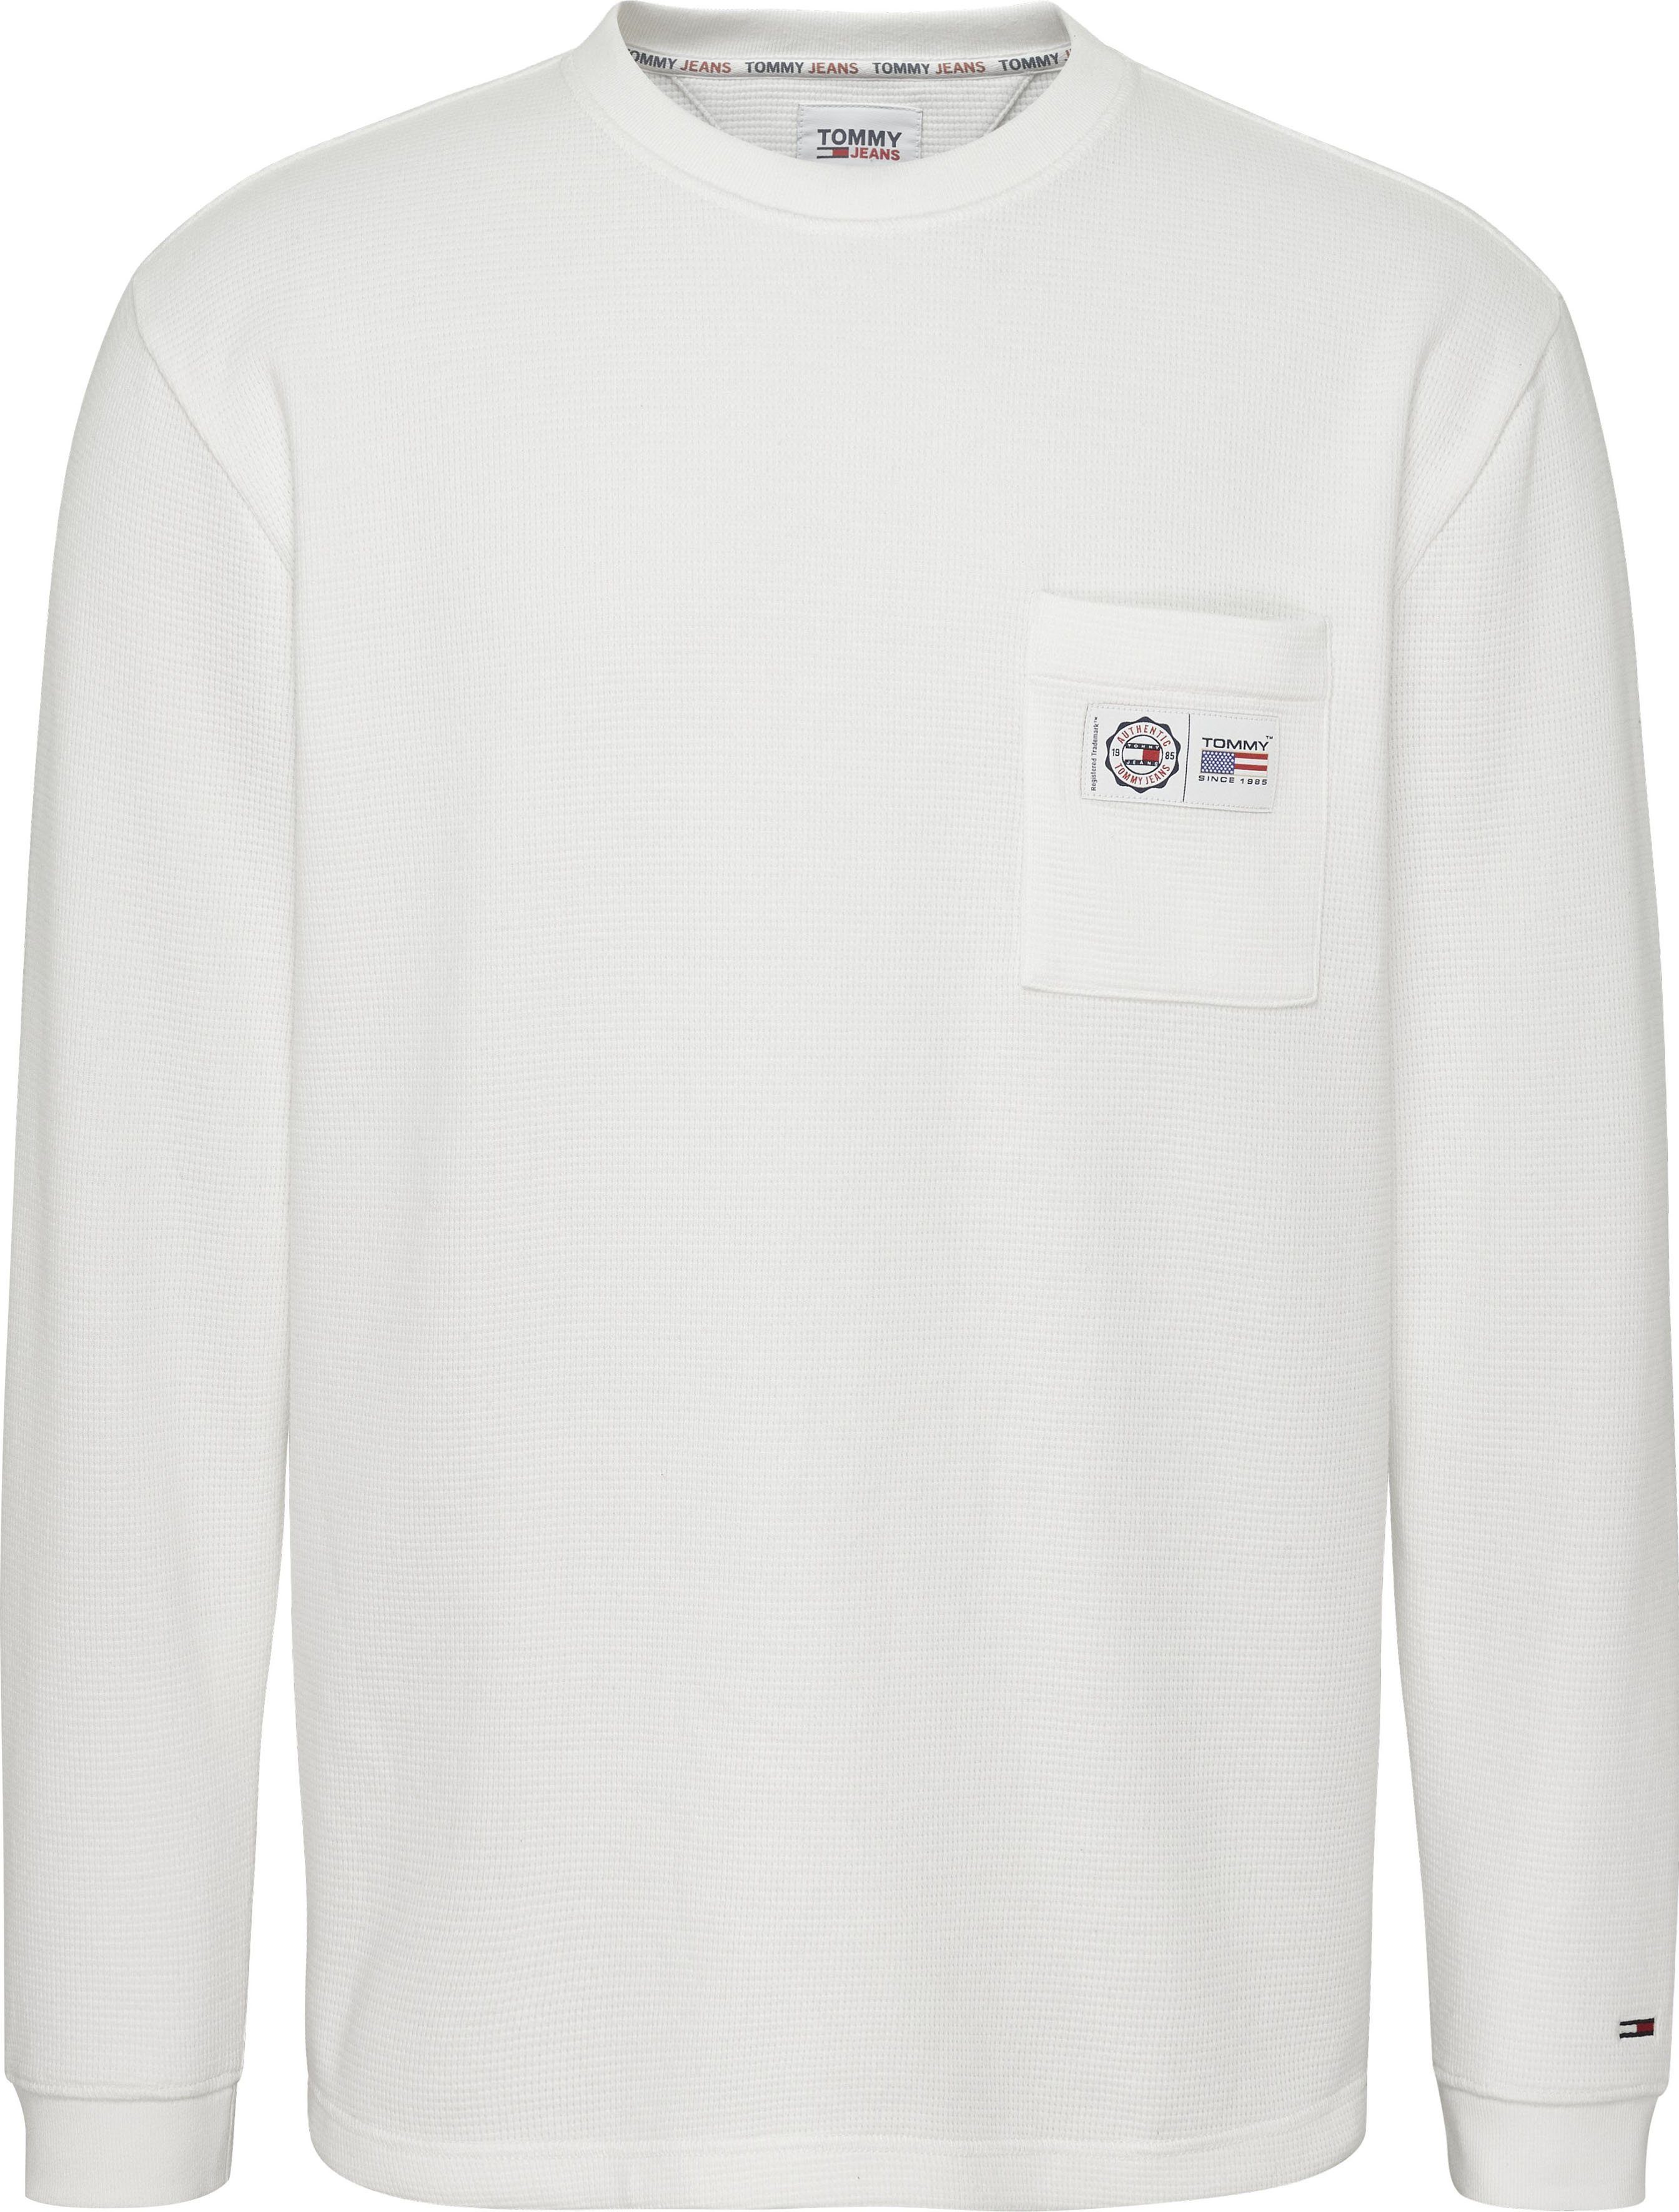 SNIT Markenlabel mit CLSC Tommy SOFT LS Jeans TJM White Langarmshirt